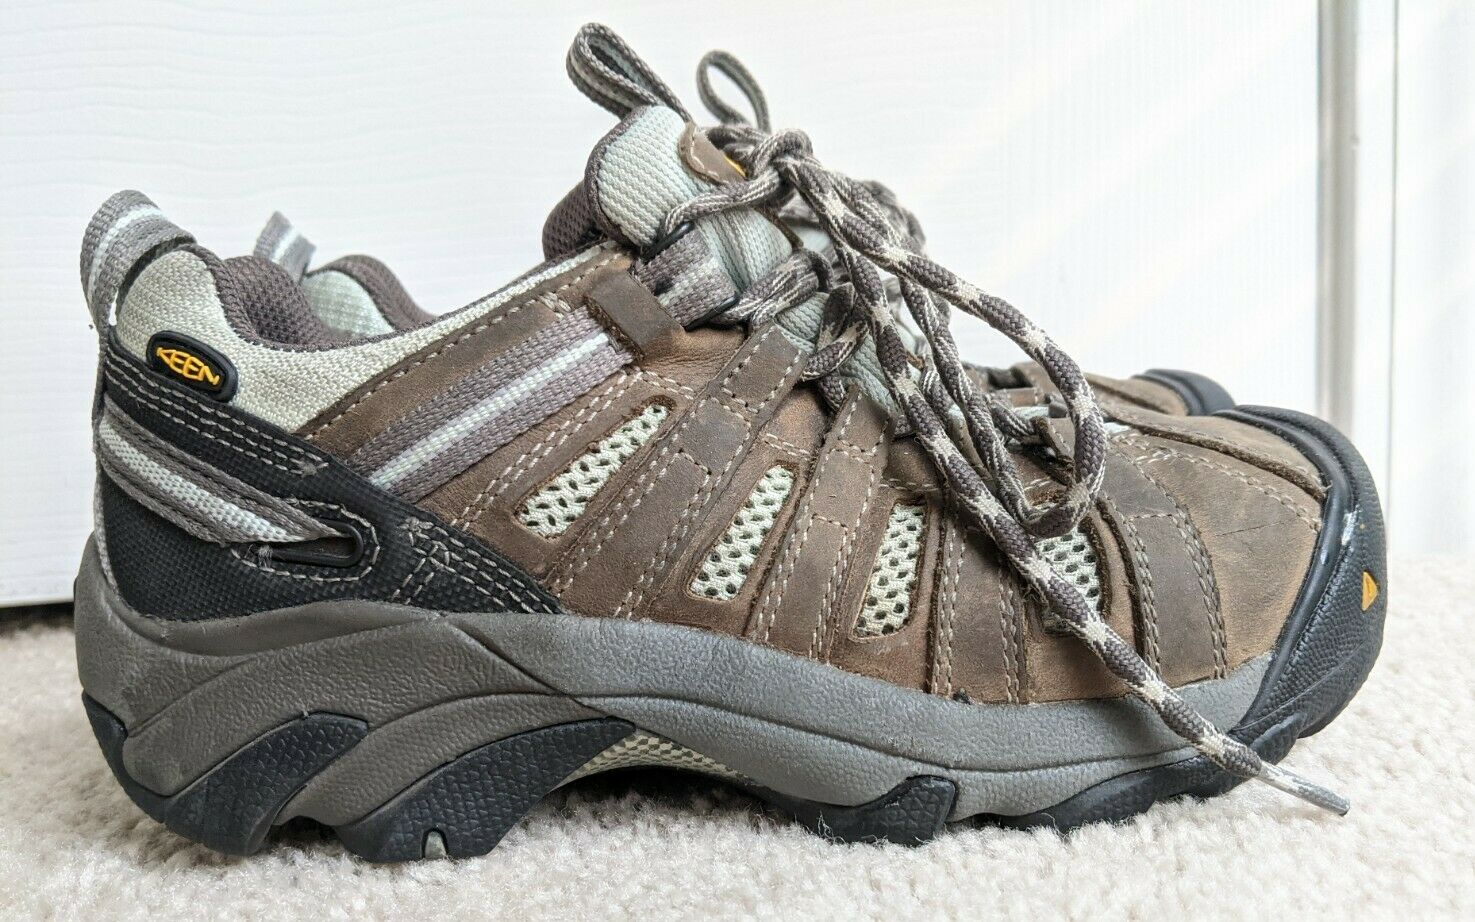 Keen Flint Low Steel Toe Safety Work Hiking Shoes Boots Womens Sz 6